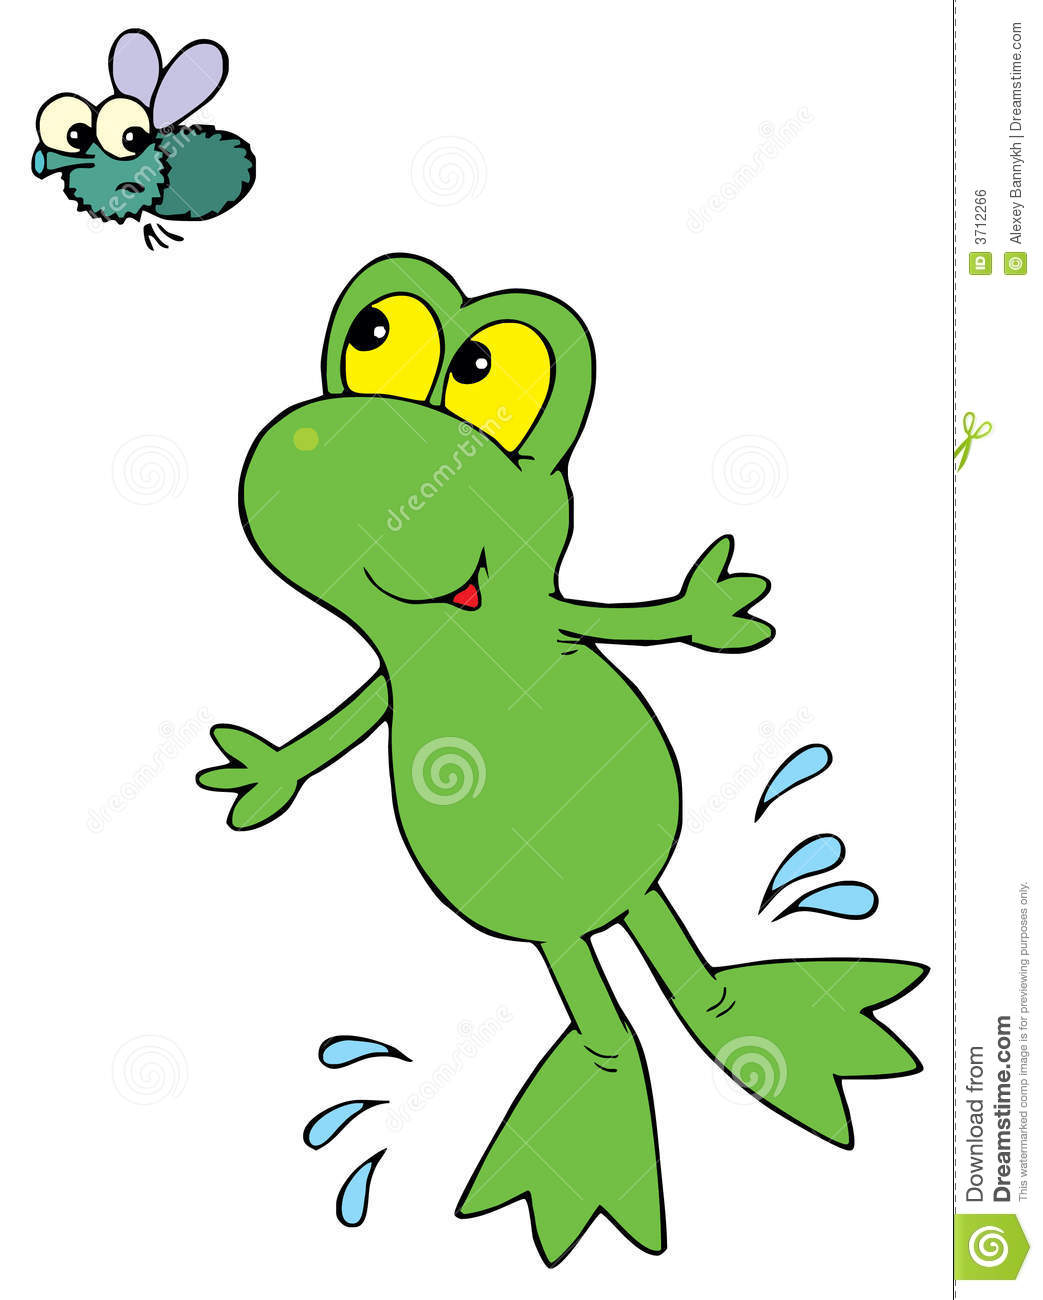 Green Frog  Vector Clip Art  Royalty Free Stock Image   Image  3712266